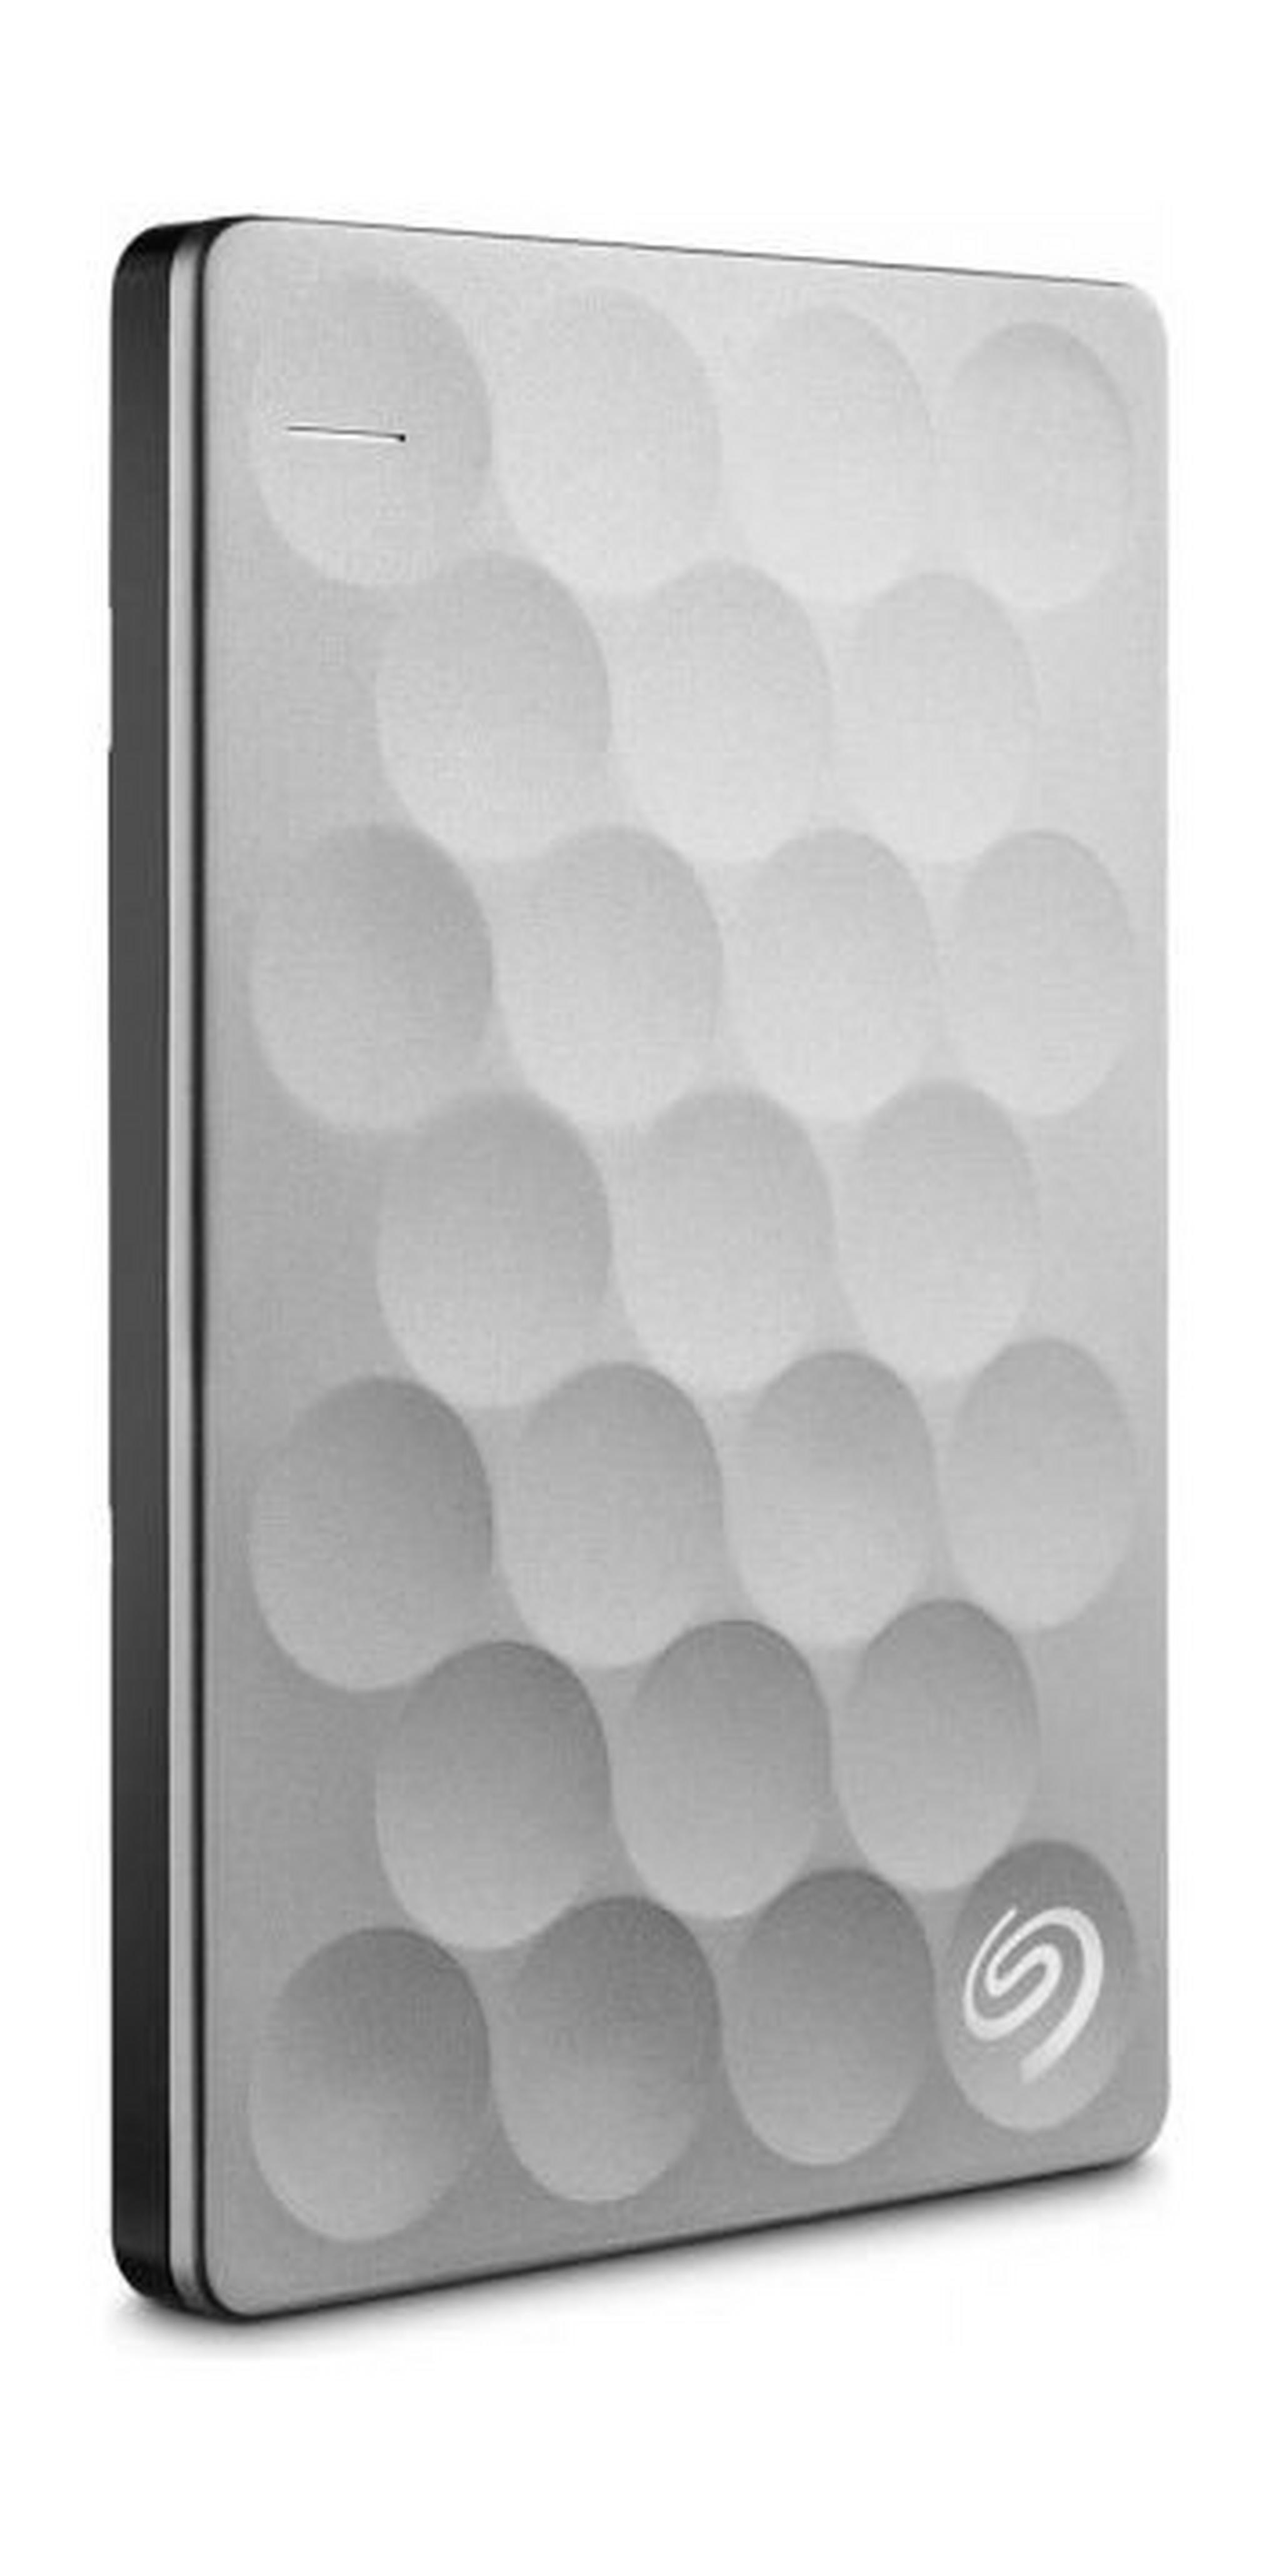 Seagate Backup Plus Ultra Slim 2TB External hard Drive (STEH2000200) – Platinum